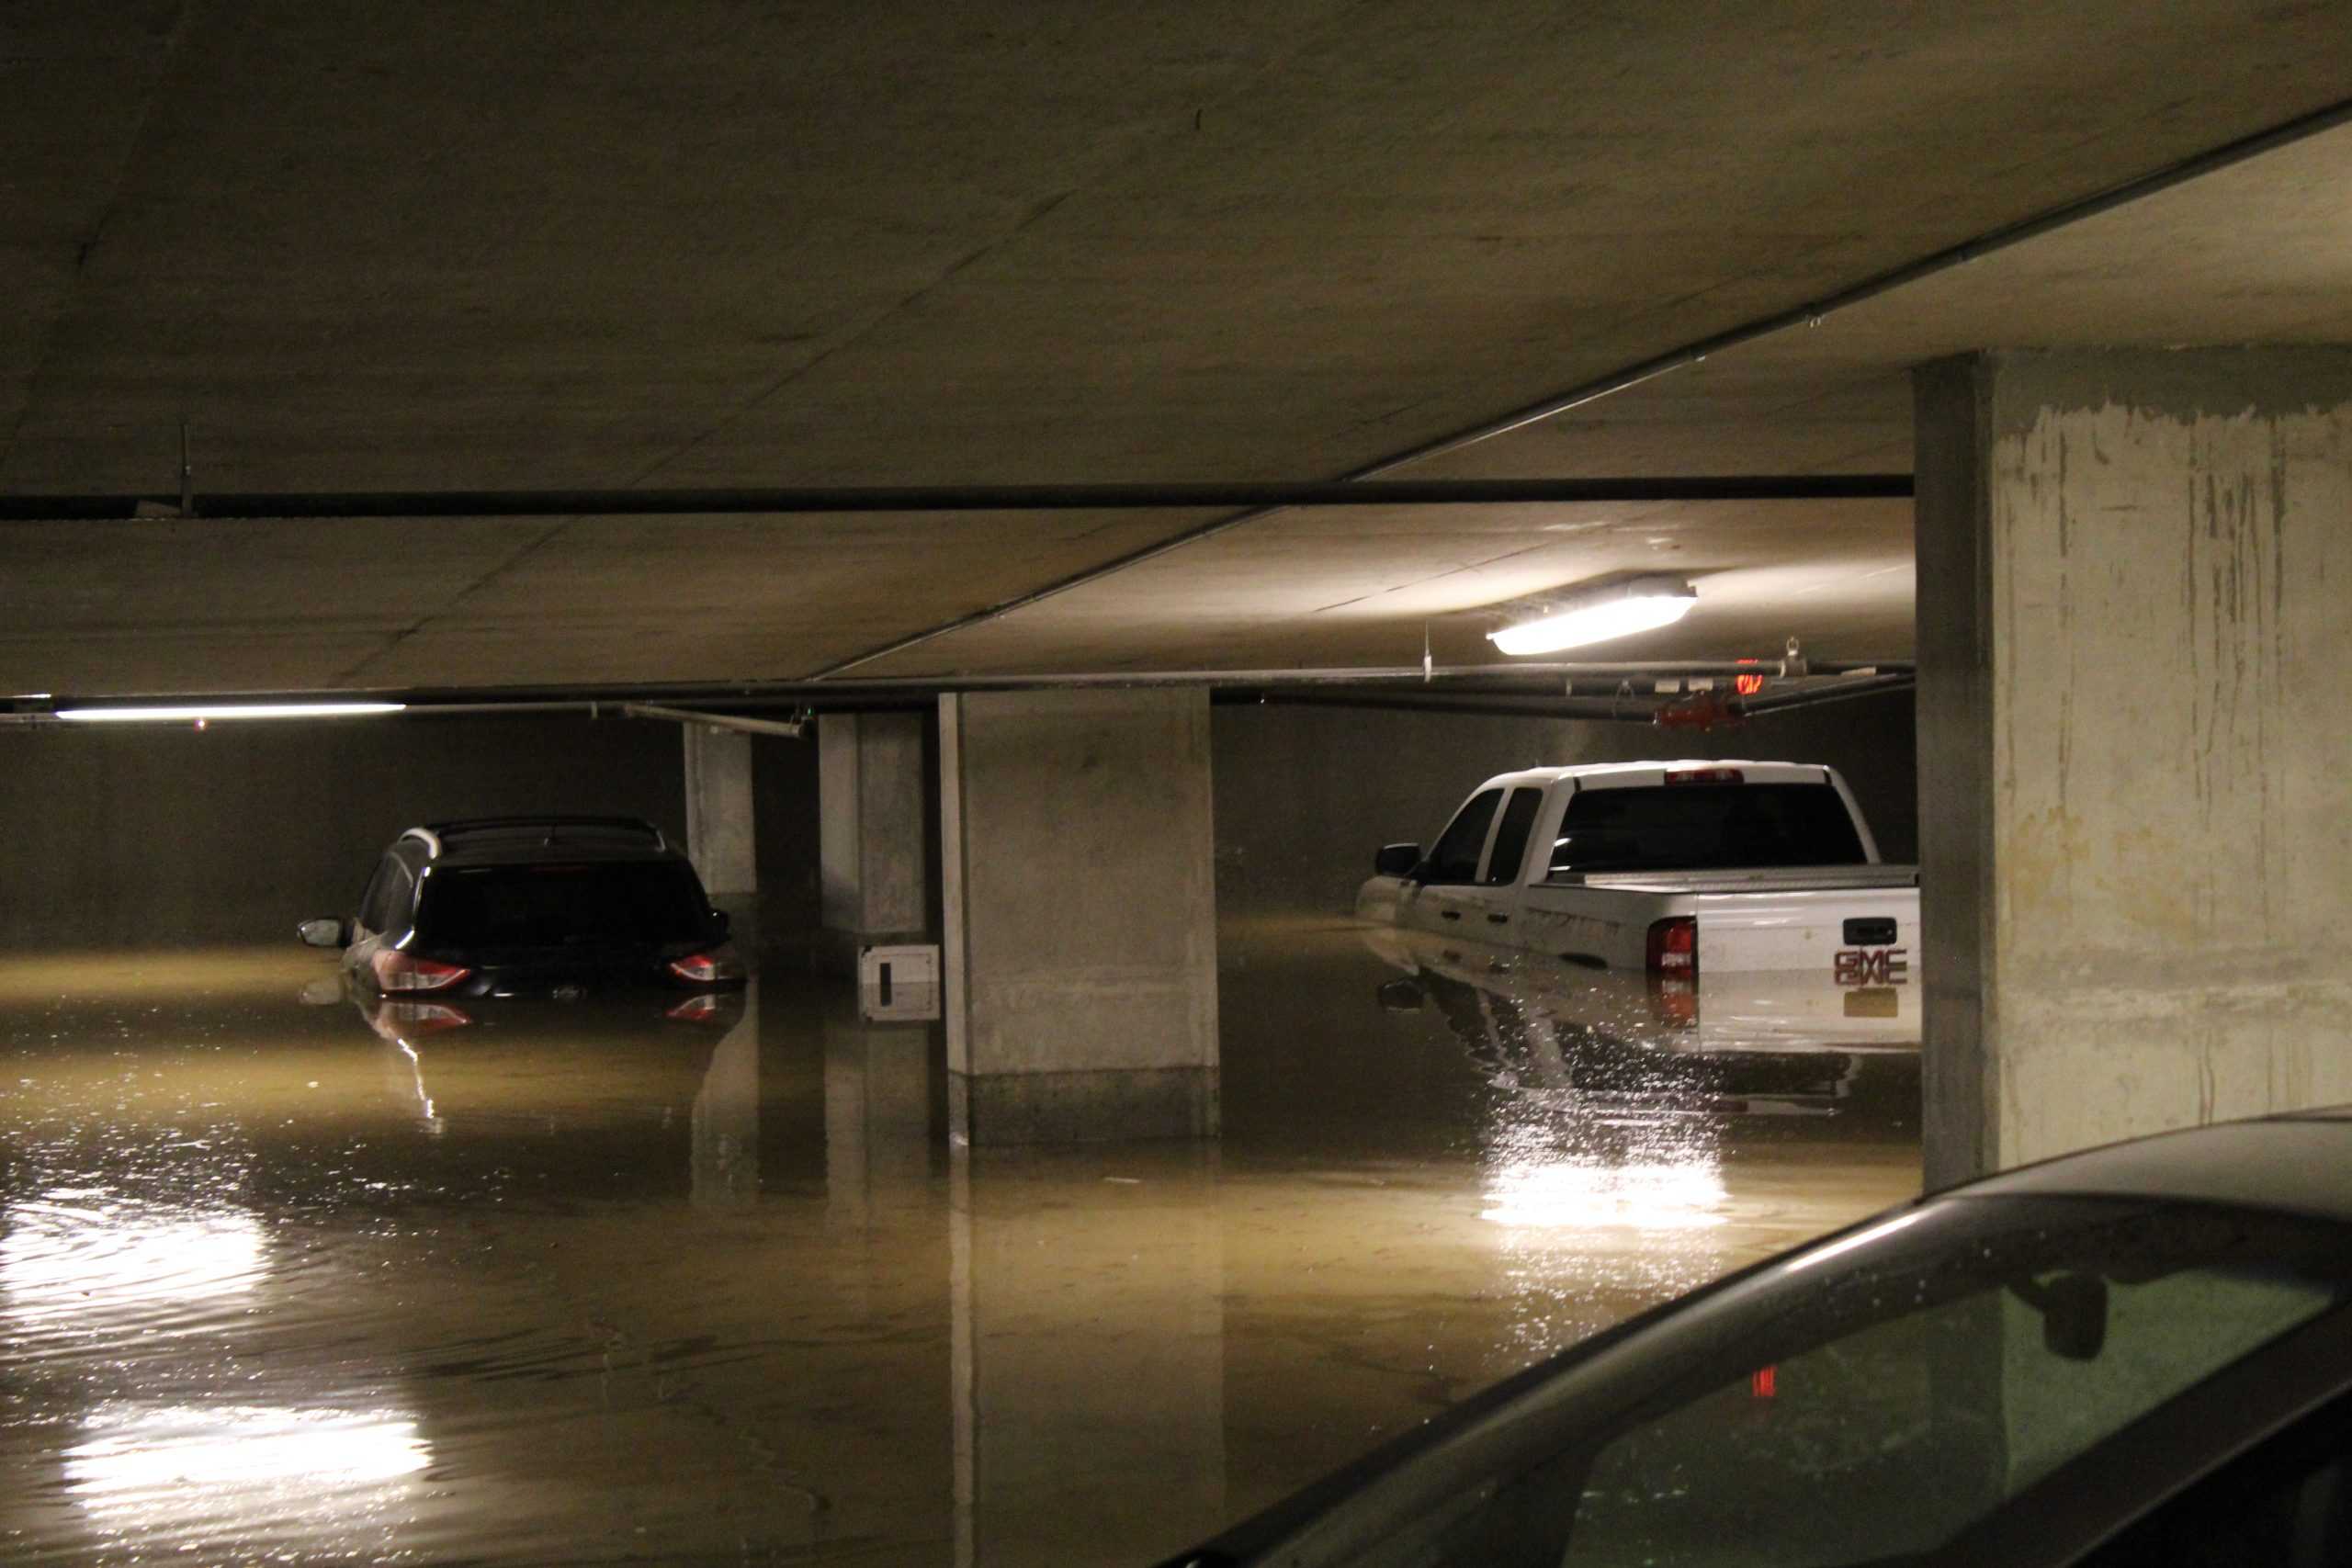 The+Pointe+residents+lose+vehicles%2C+belongings+in+flash+flood